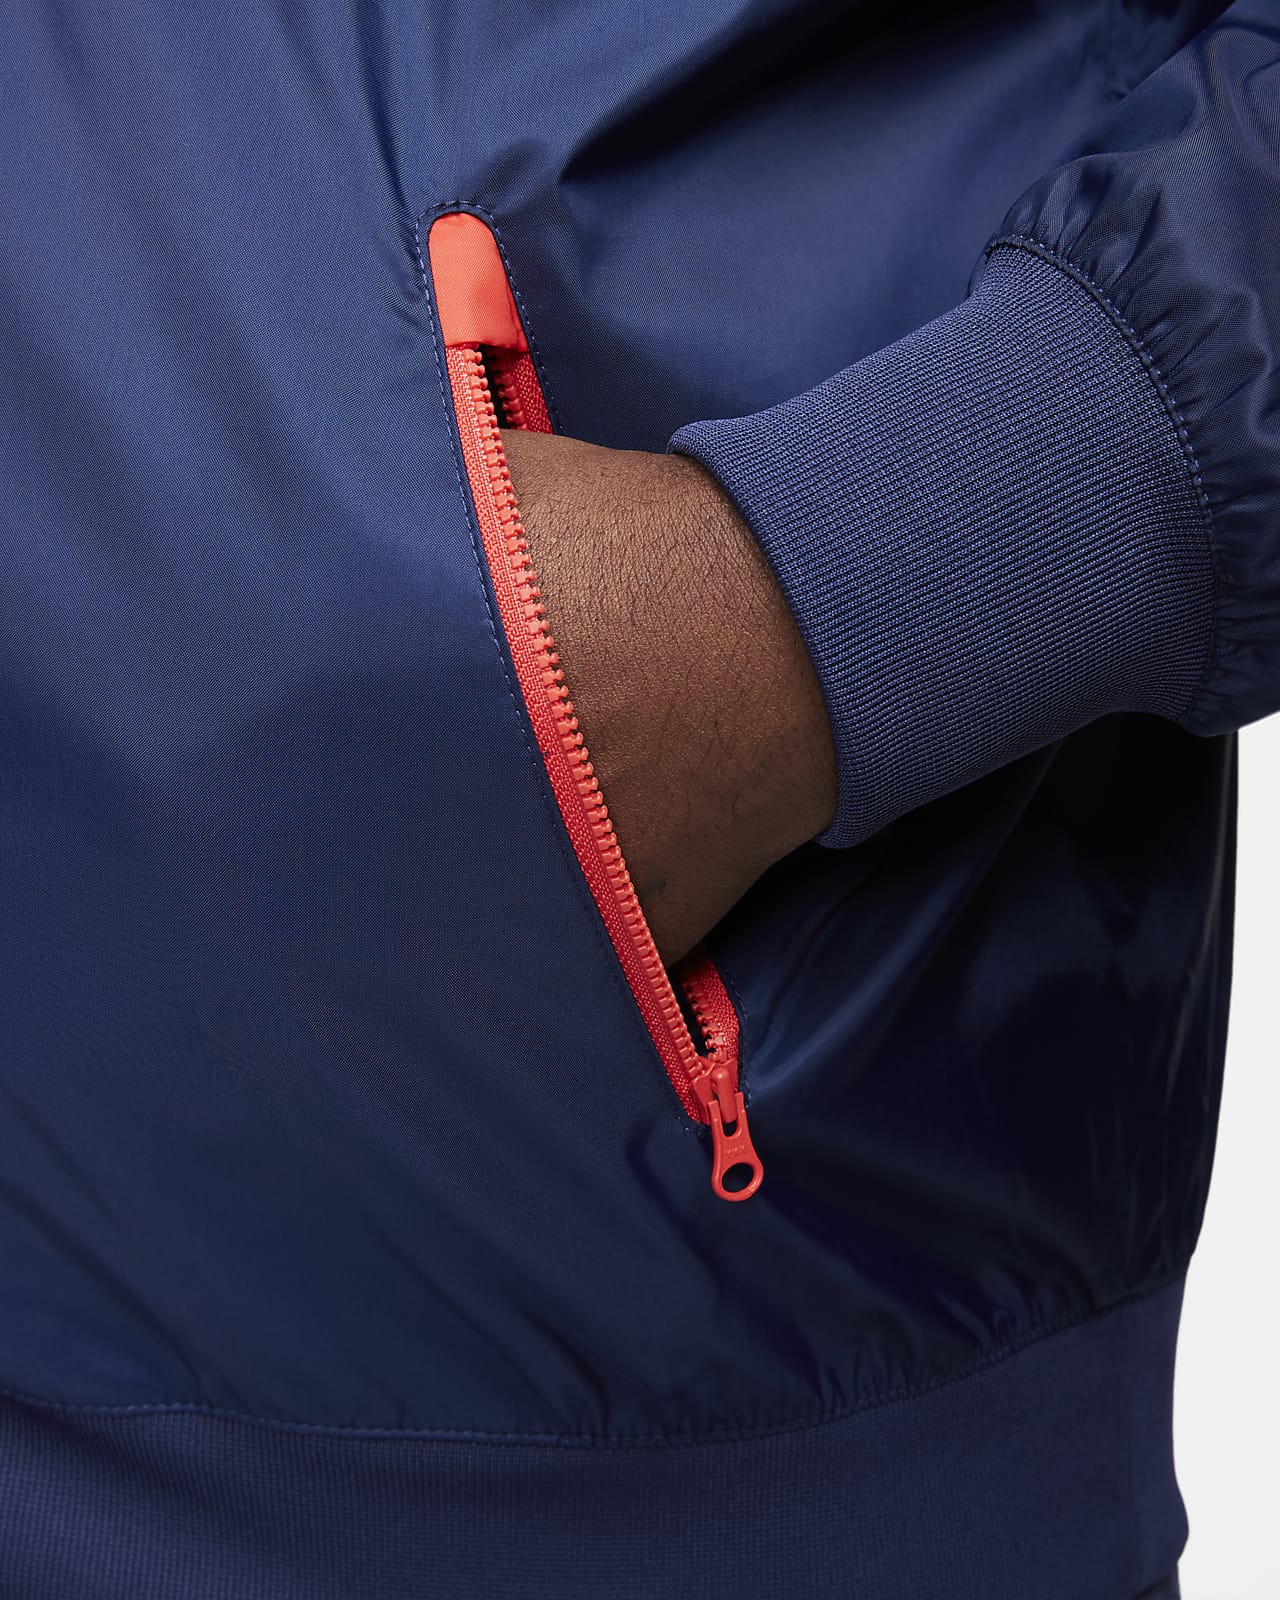 Nike  Sportswear Heritage Essentials Windrunner Men's Hooded